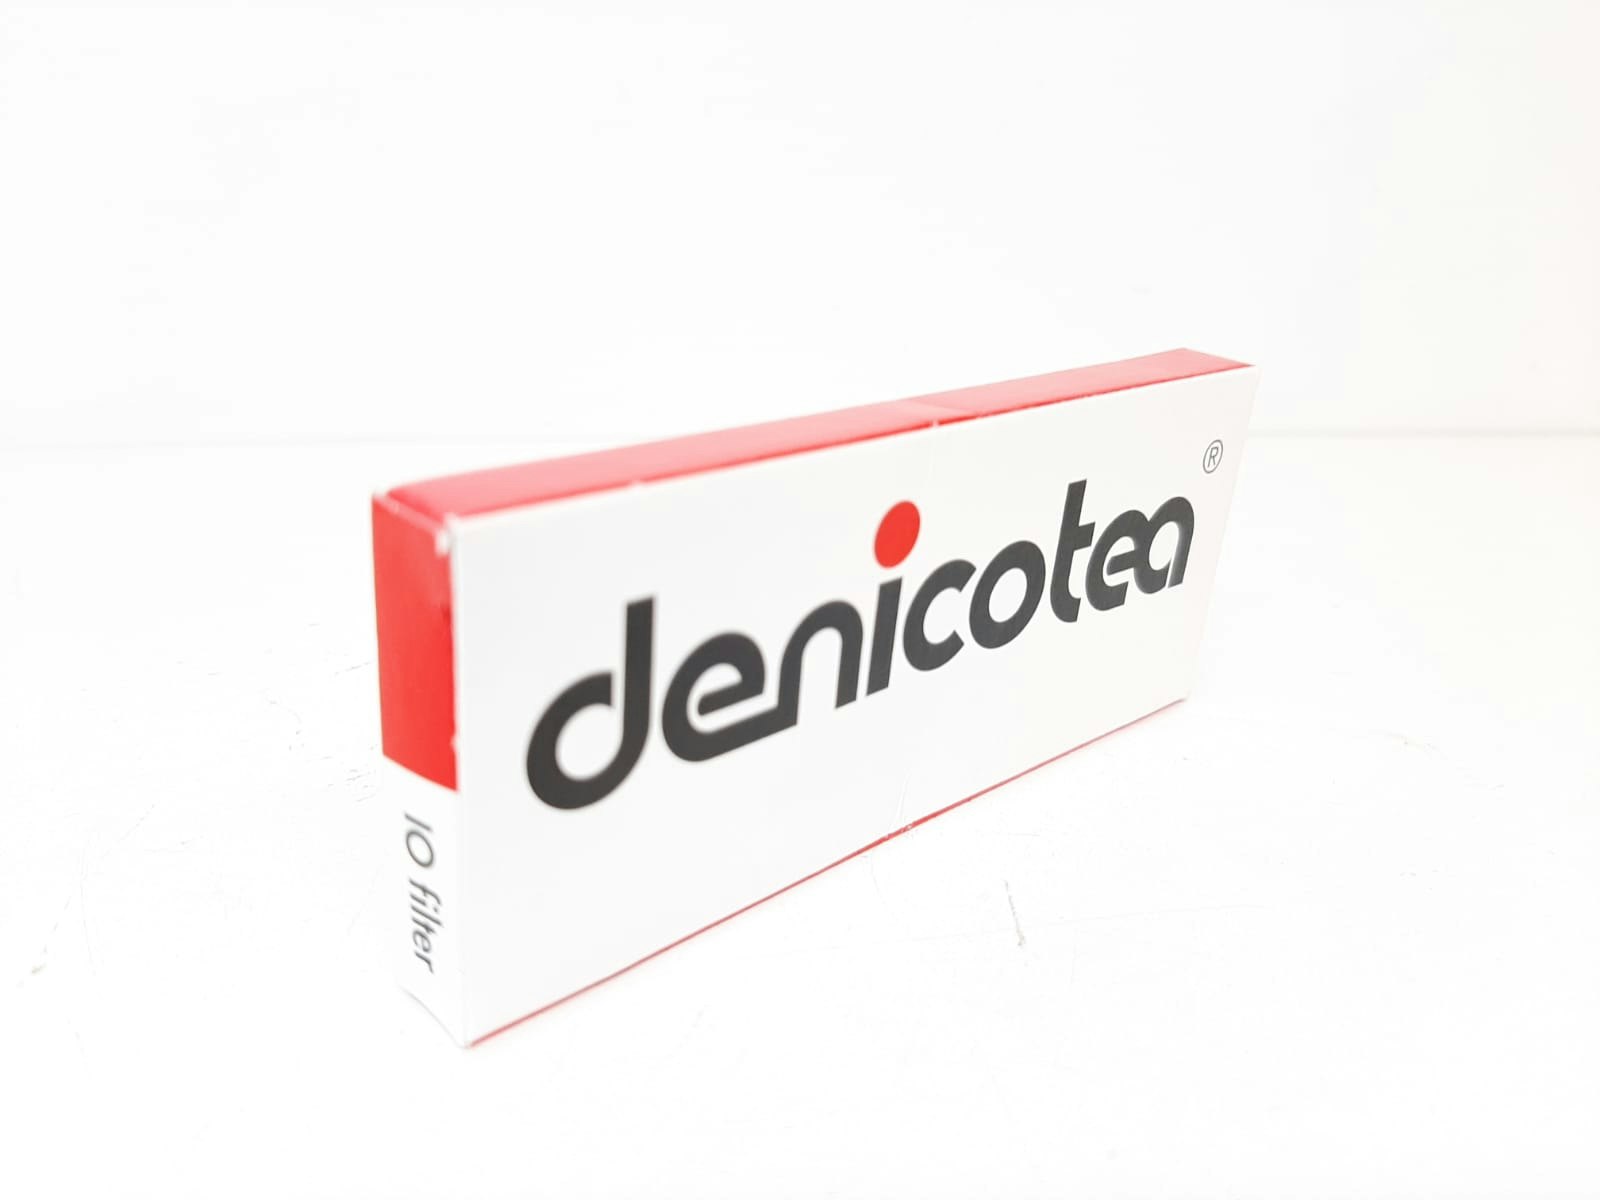 10 stycken DENICOTEA Filter (Cigarettmunstycke)